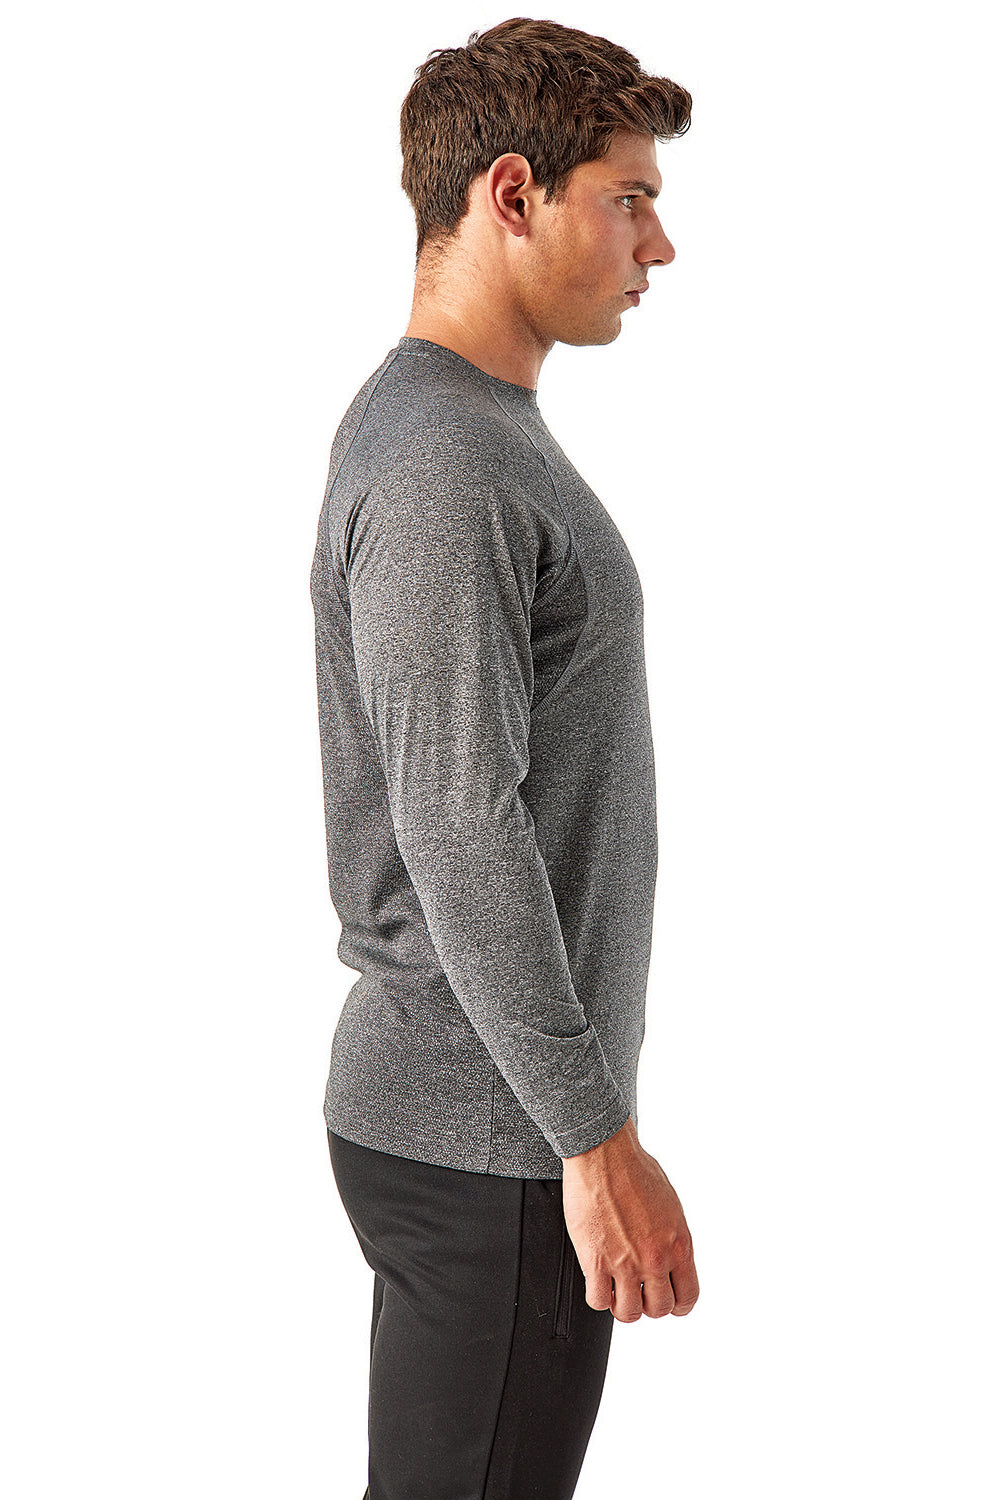 TriDri TD050 Mens Panelled Tech Moisture Wicking Long Sleeve Crewneck T-Shirt Black Melange Side